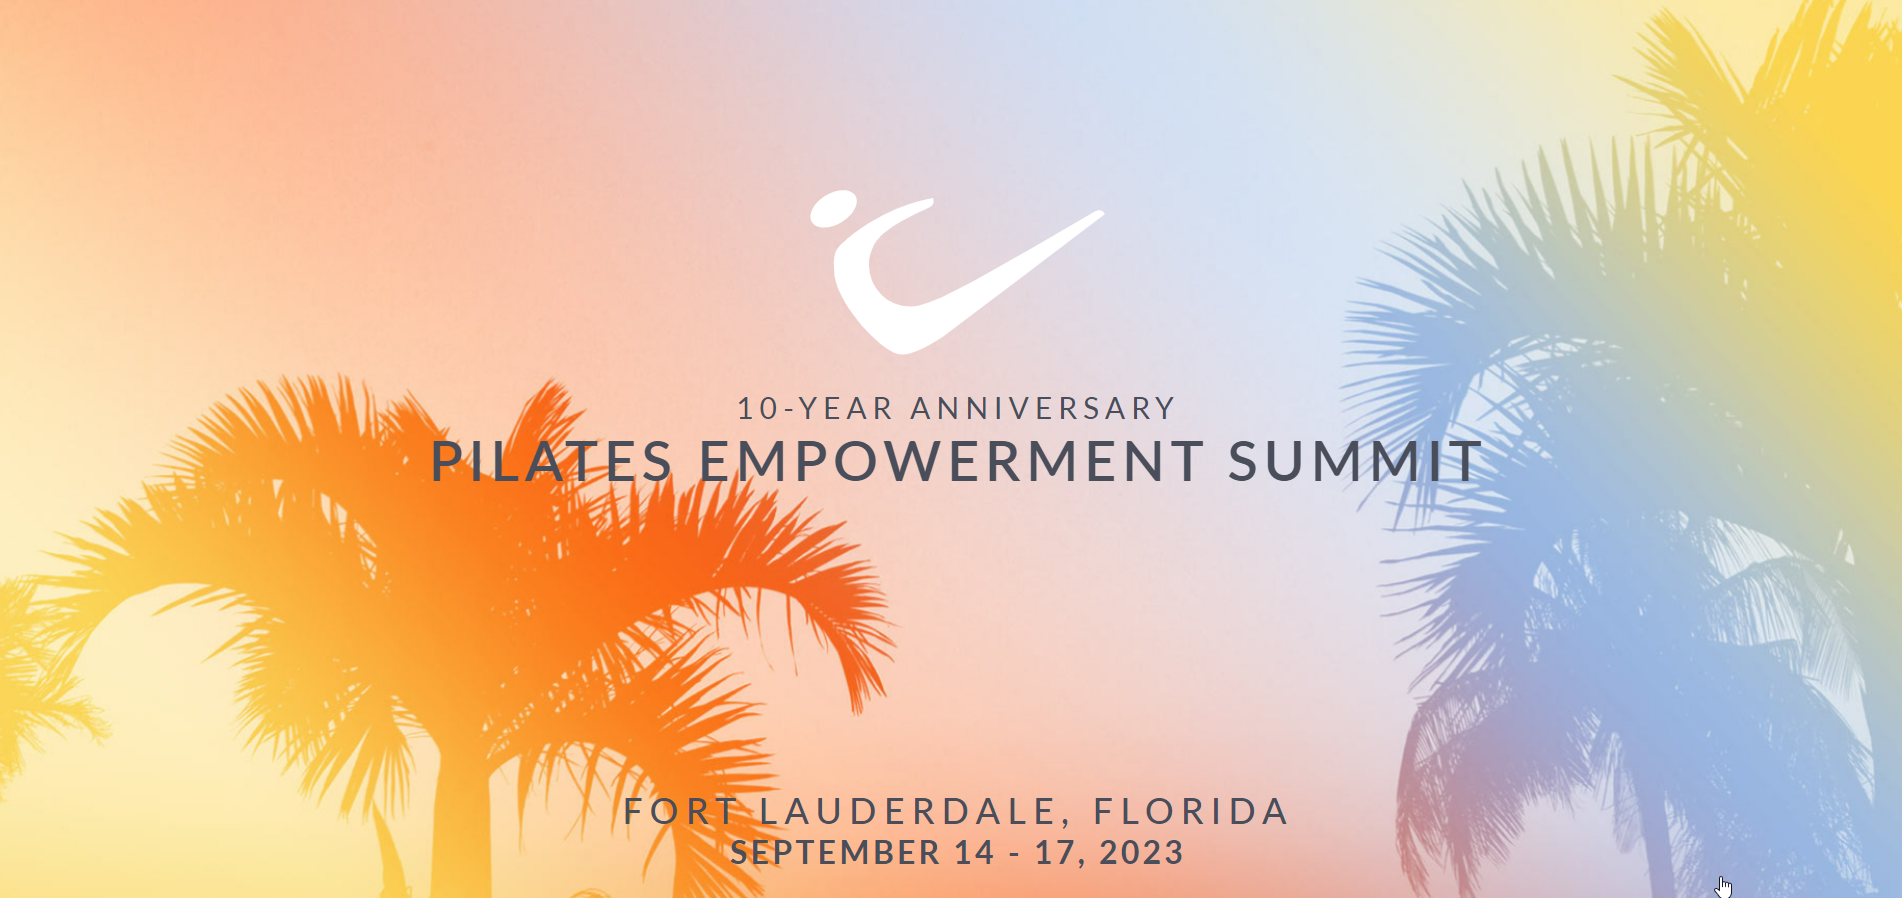 Pilates Empowerment Summit - Fort Lauderdale, FL